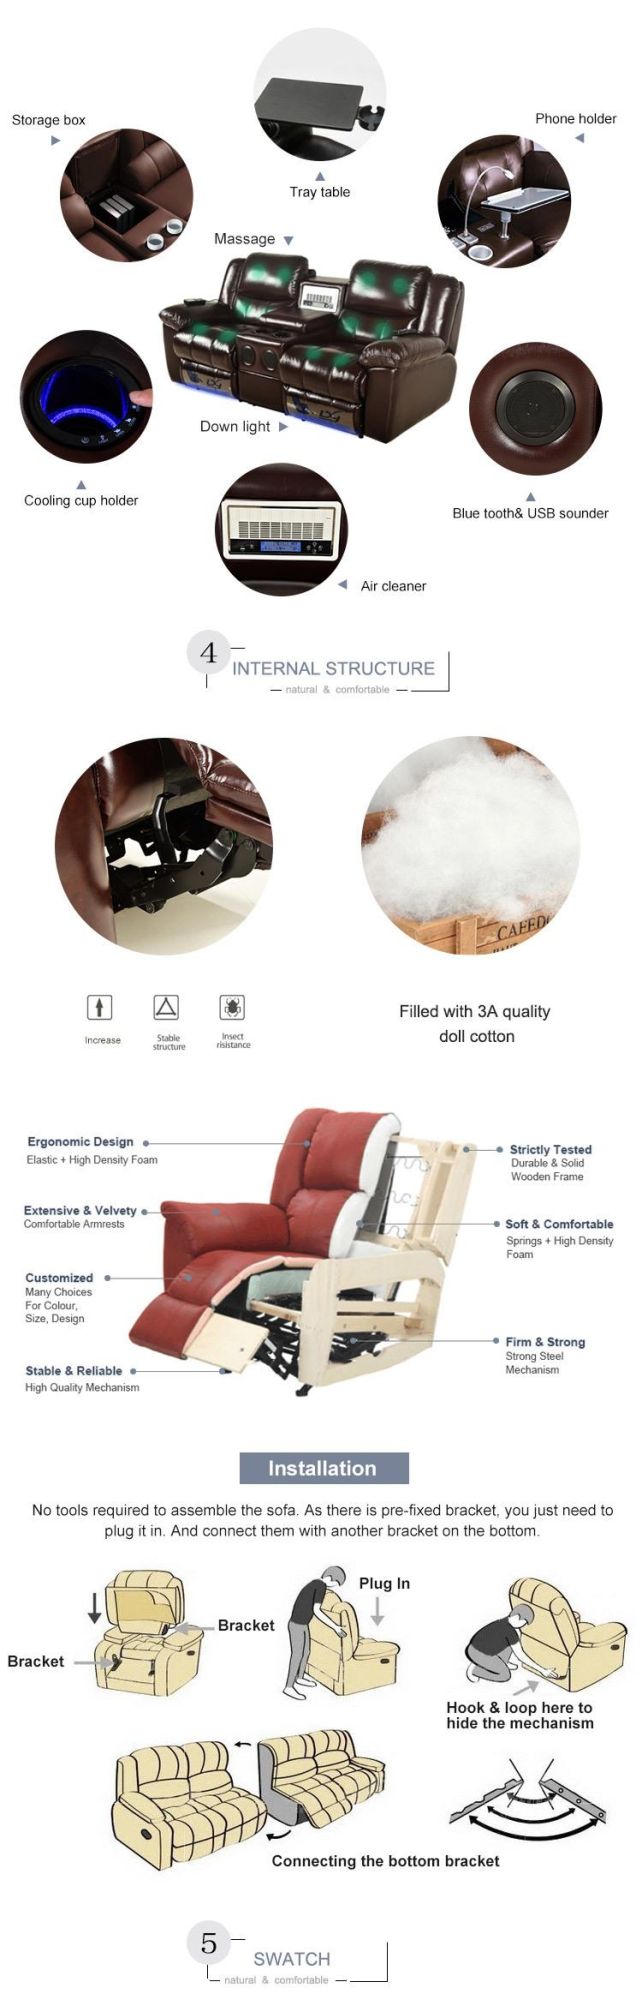 White Real Leather Living Room Sofa Set Design